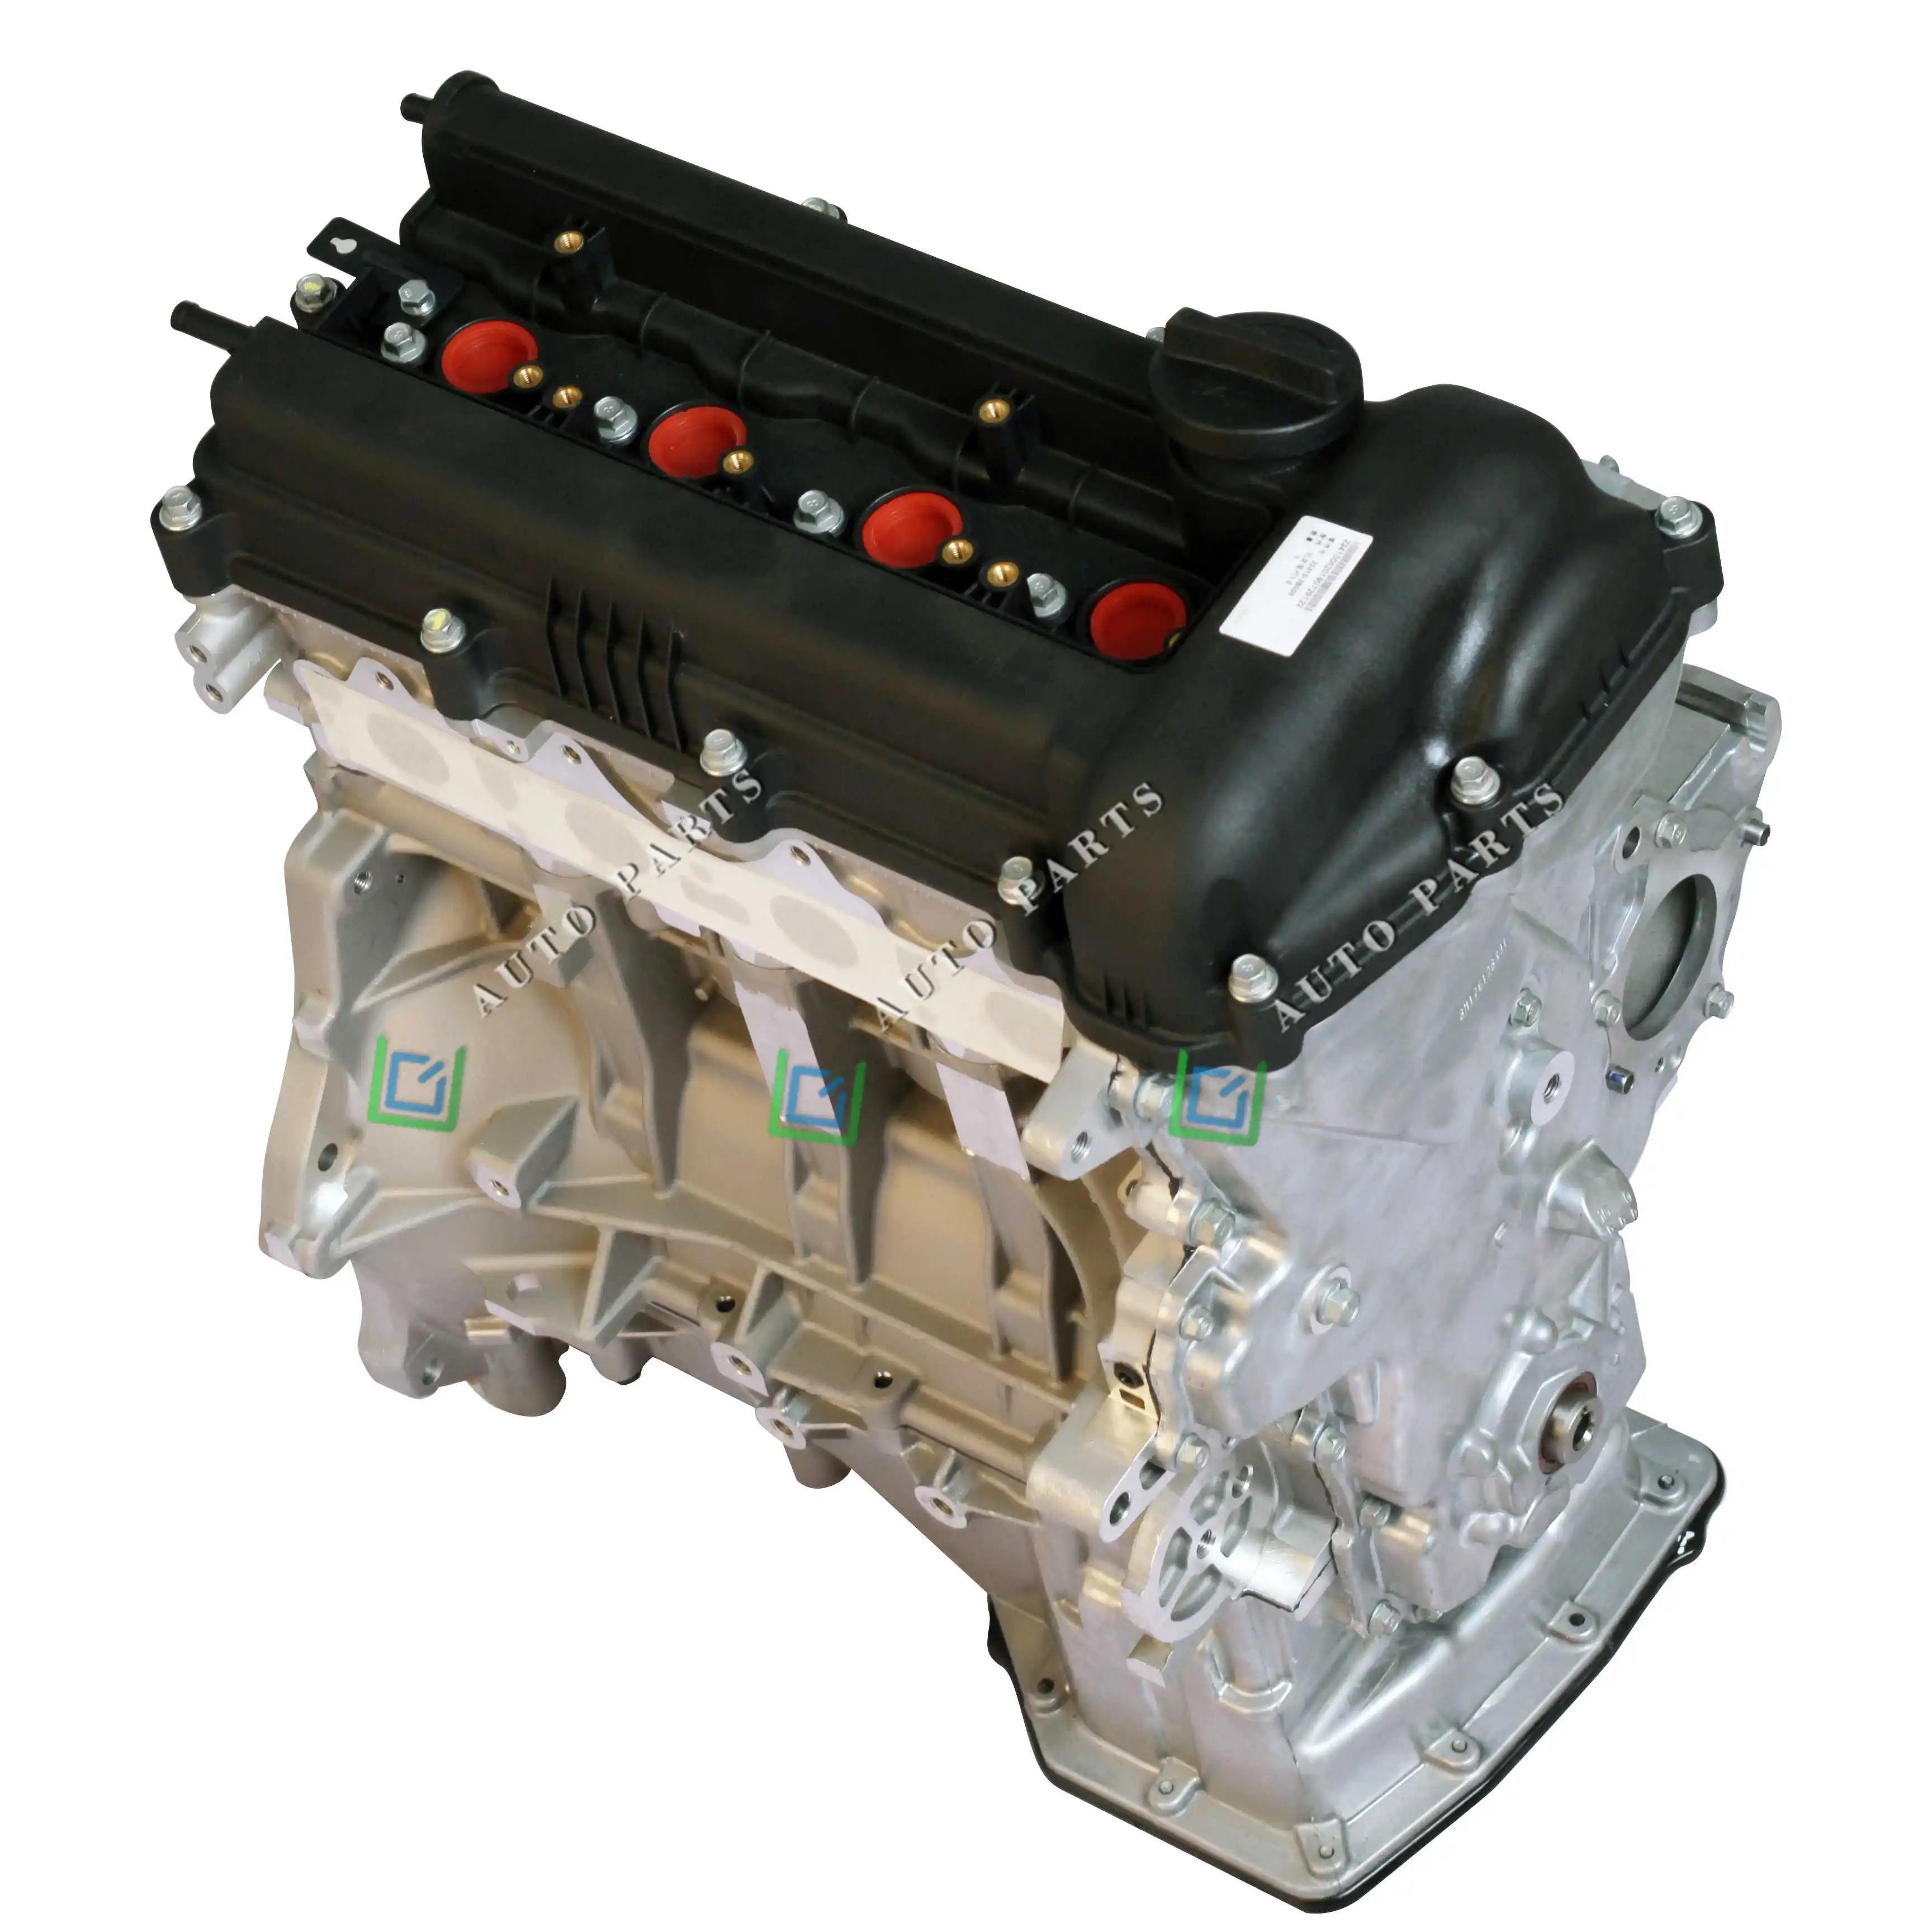 CG автозапчасти Двигатель G4FA длинный блок G4FA корейский двигатель G4FG G4FJ G4KD G4KE двигатель Hyundai